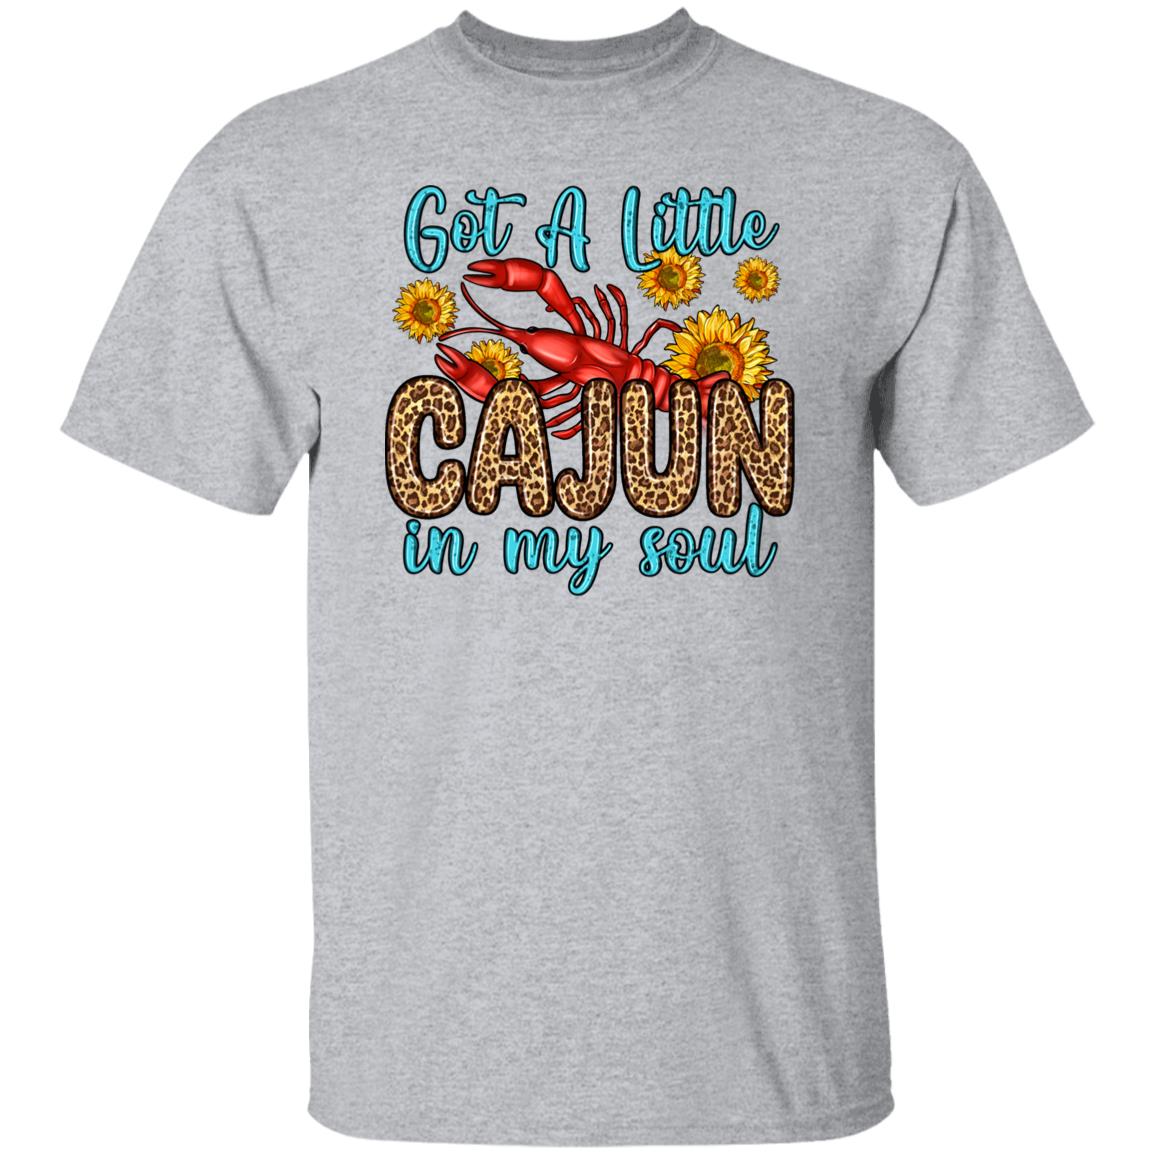 Got a little cajun in my soul T-Shirt gift Crawfish season Unisex tee Sand White Sport Grey-Family-Gift-Planet